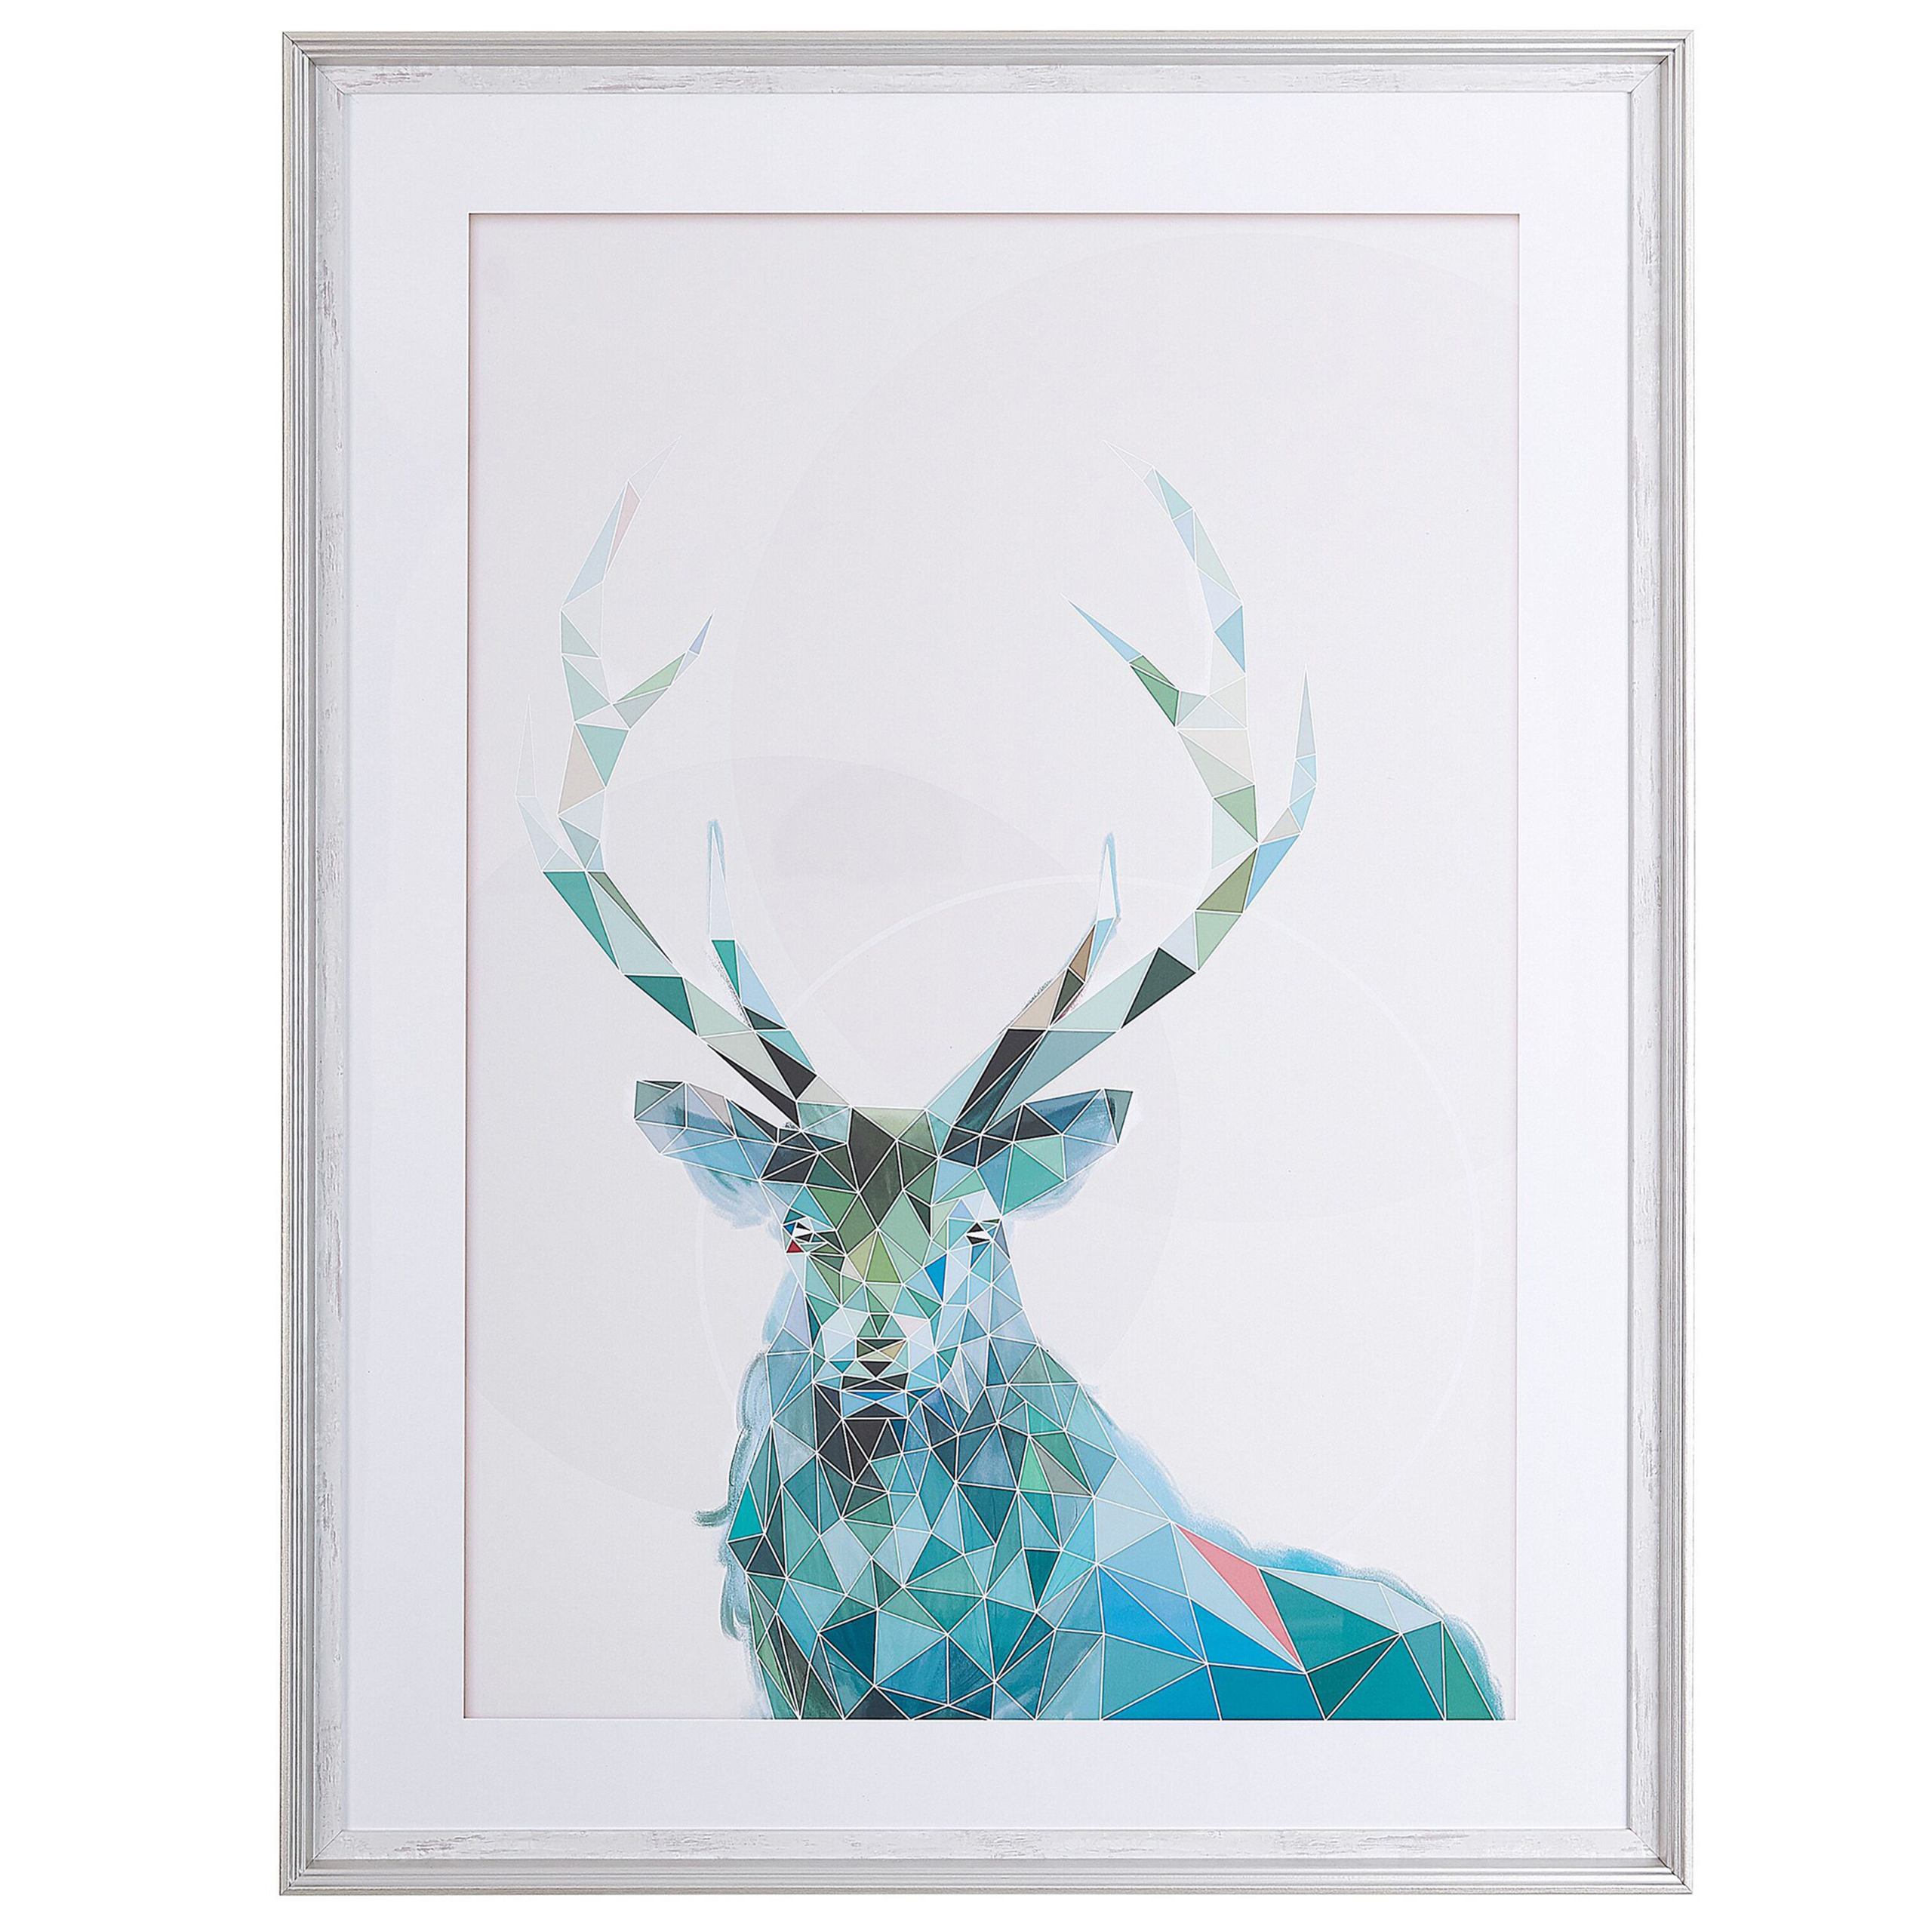 Beliani Framed Wall Art Deer Print Blue with White Frame 60 x 80 cm Distressed Minimalist Scandinavian Design